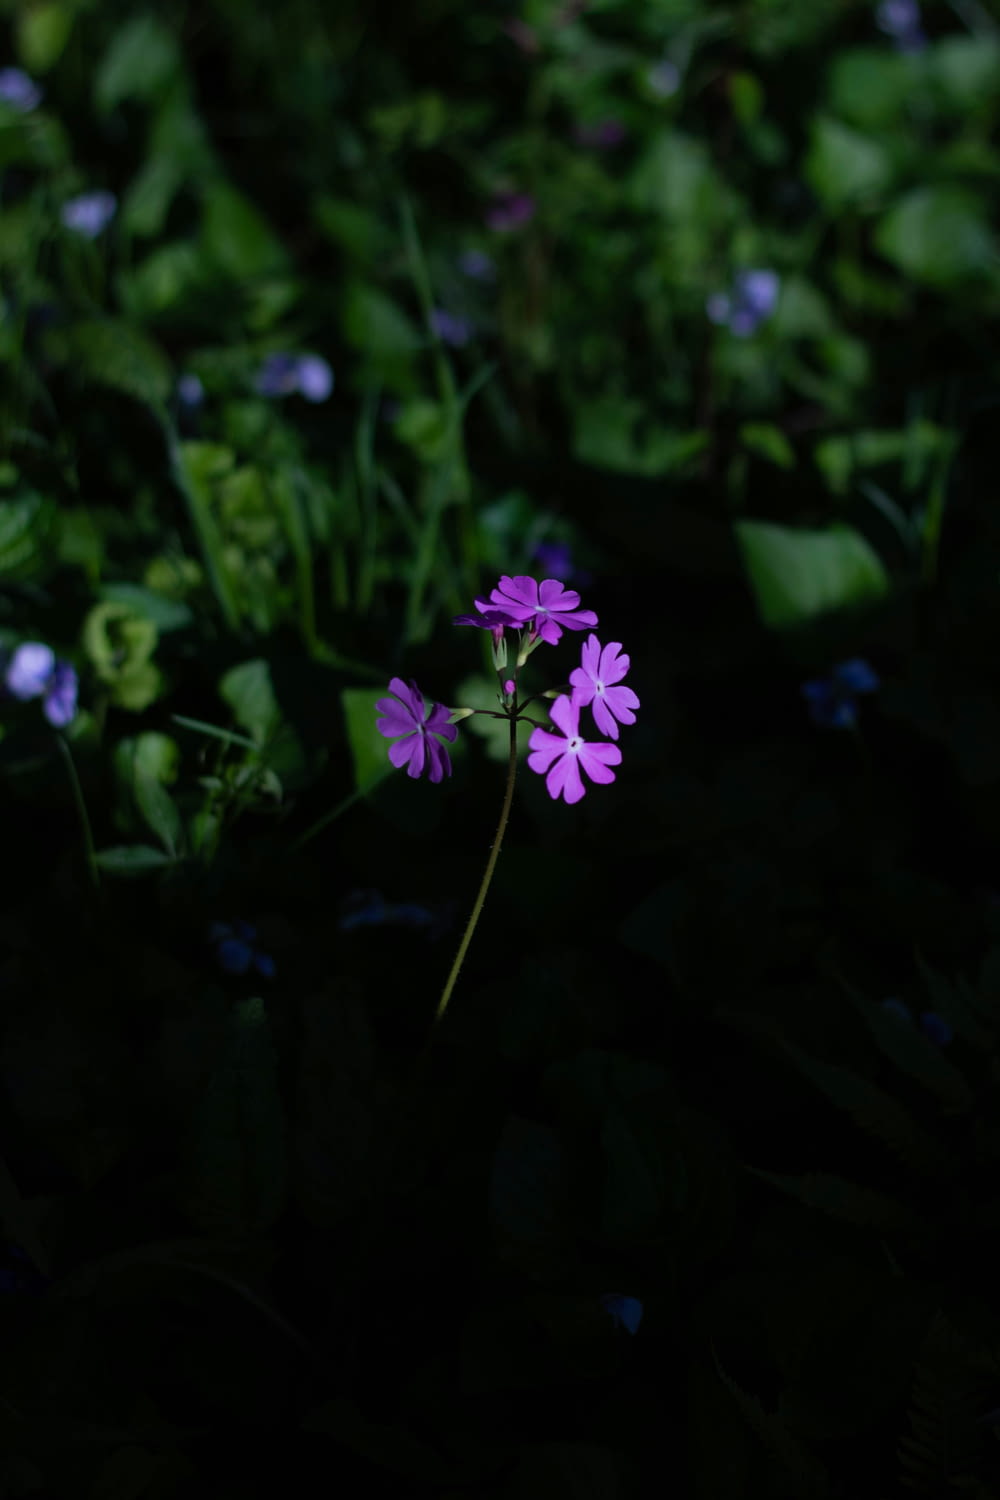 a single purple flower in the middle of a field